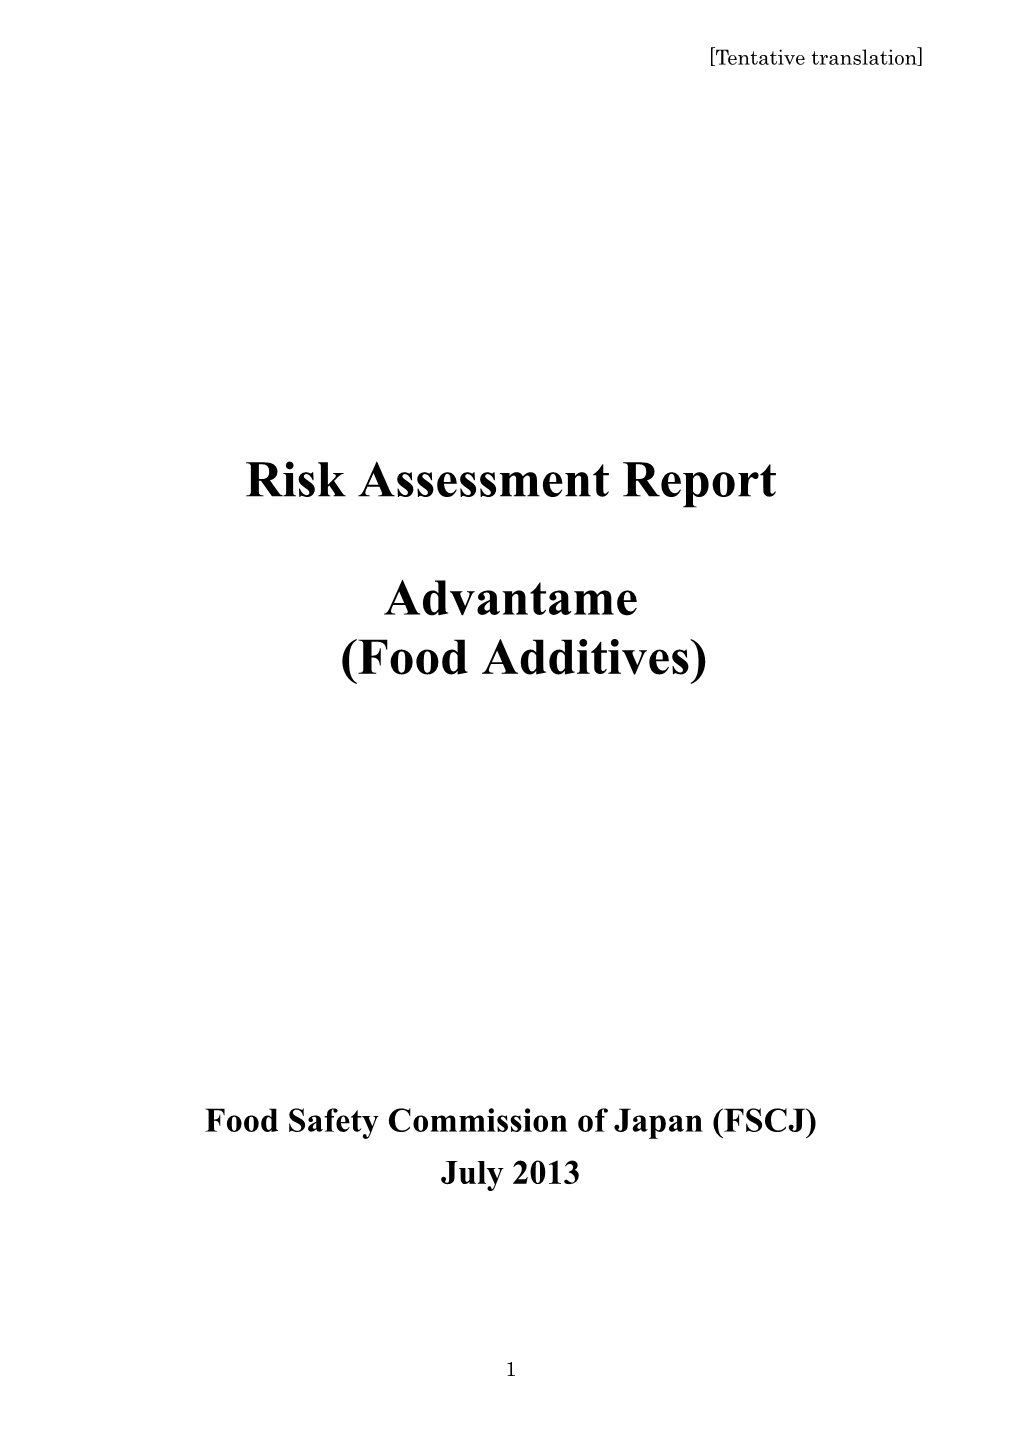 Risk Assessment Report Advantame (Food Additives)